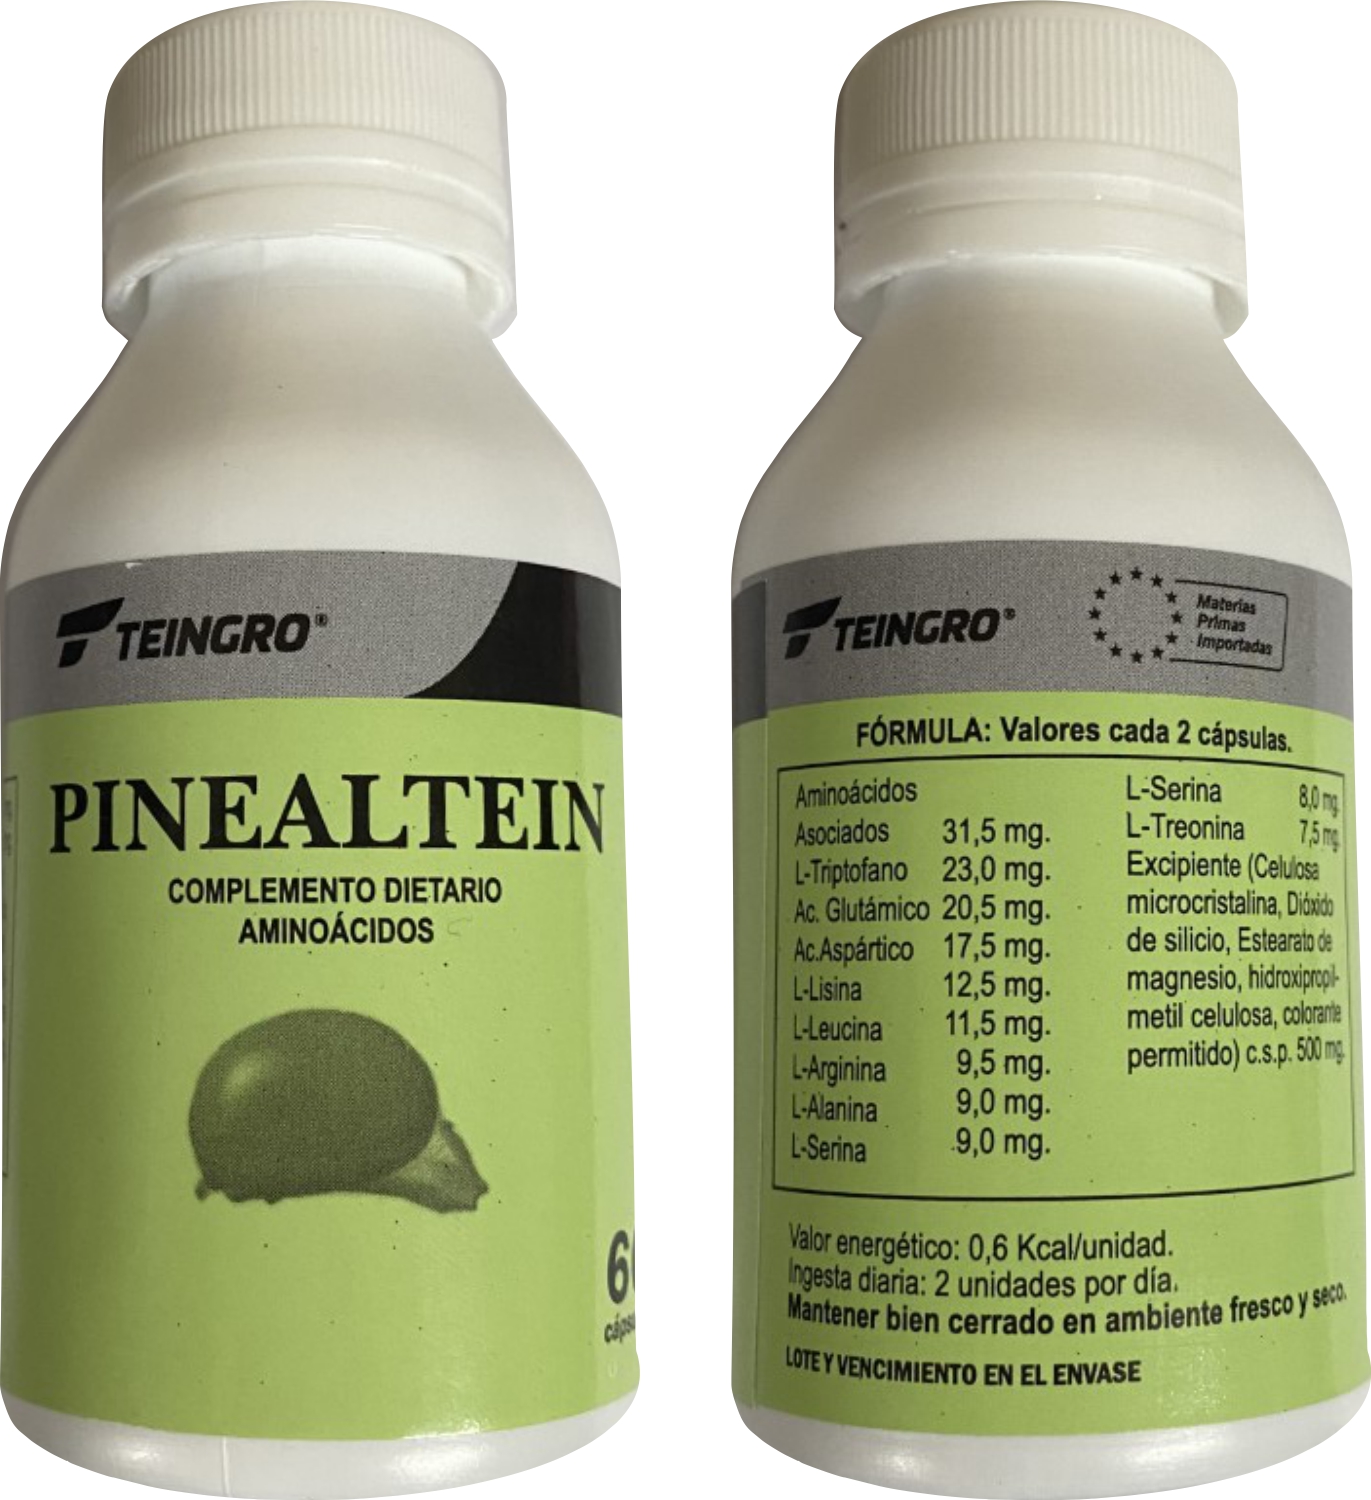 pinealtein image